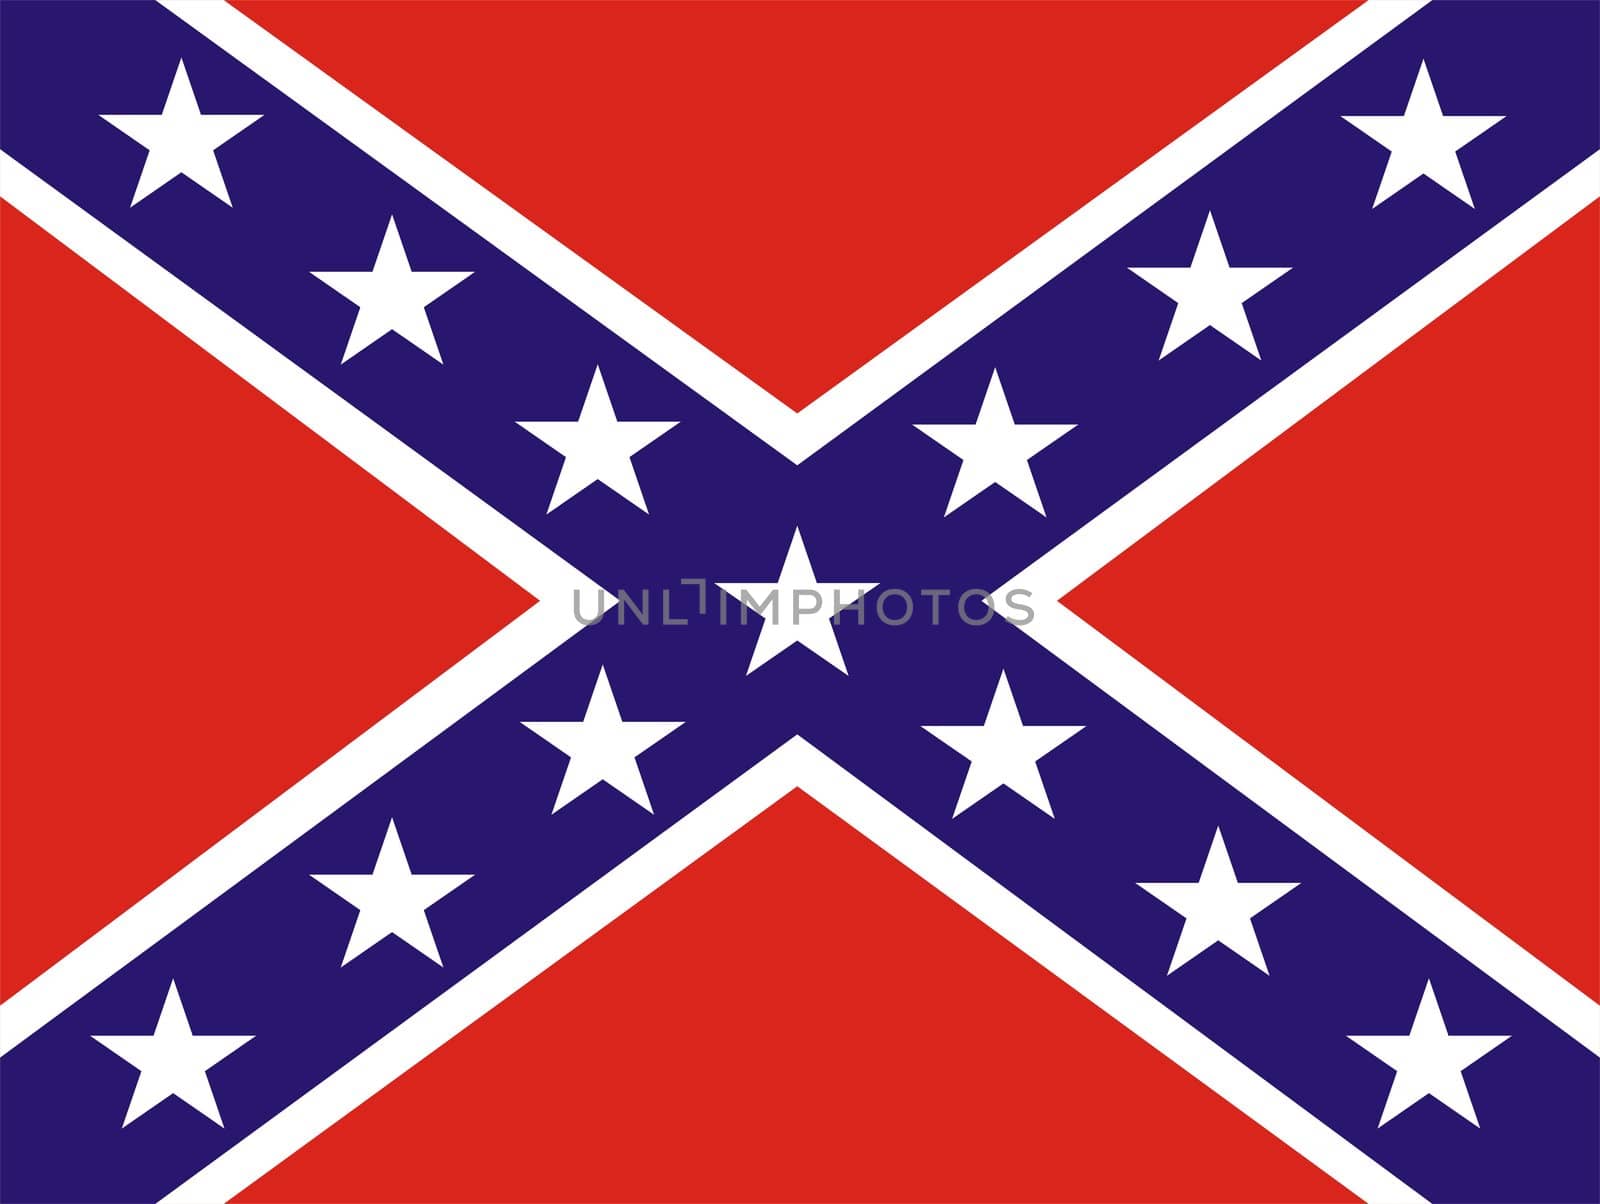 2D illustration of a american Confederate Flag
